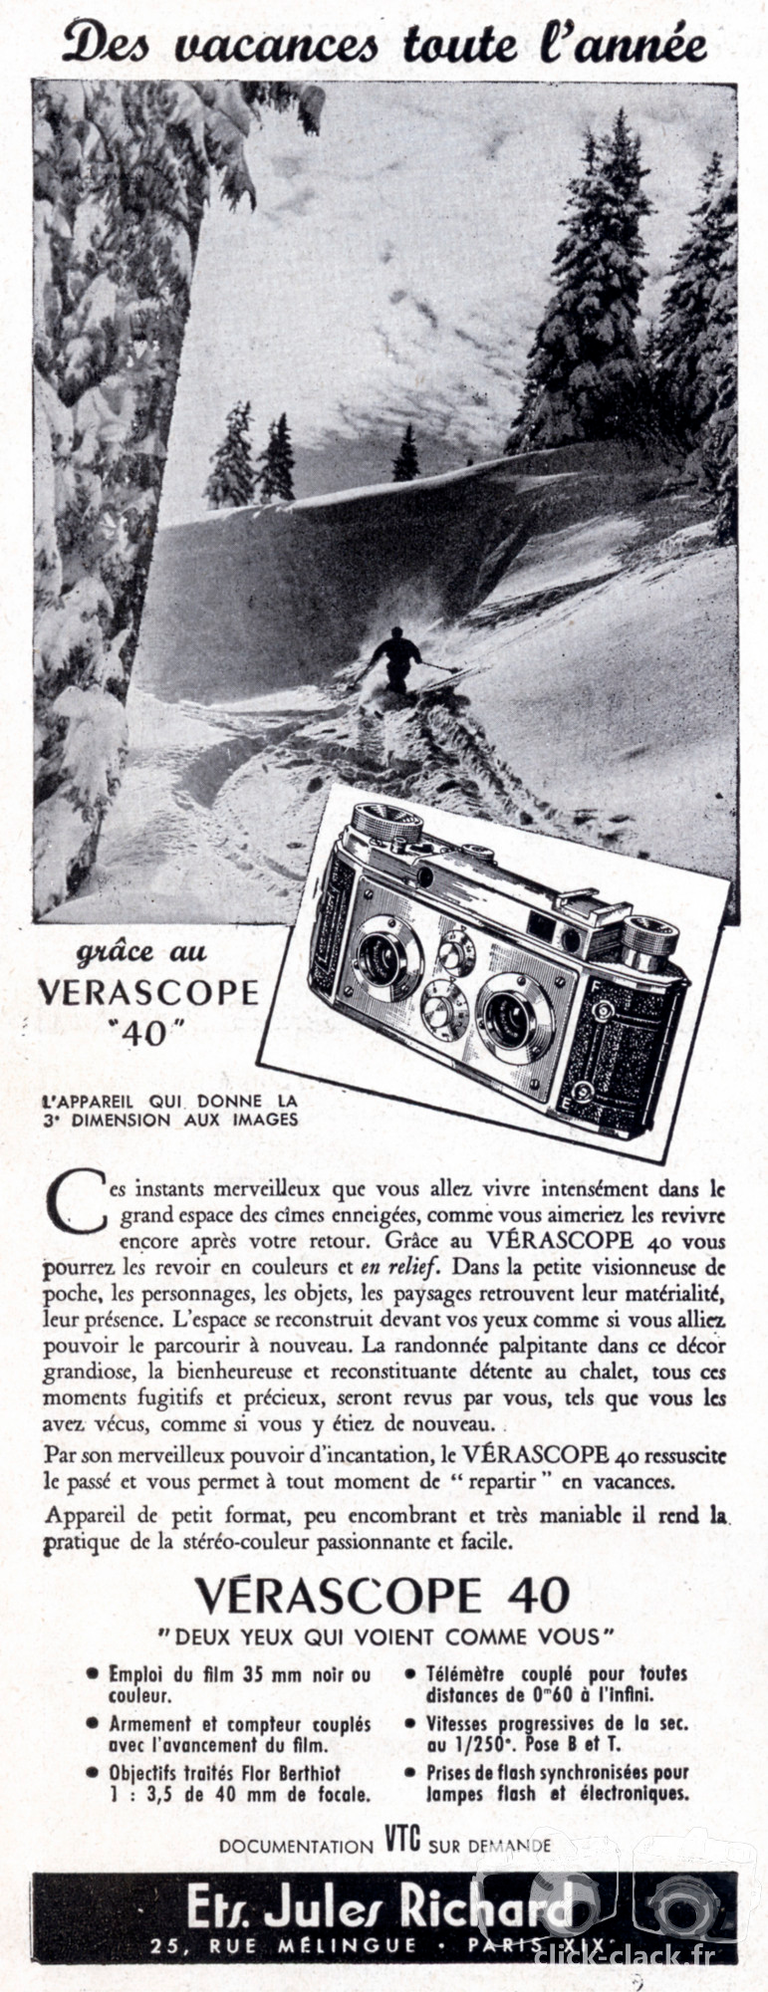 Richard - Vérascope F40 - 1955